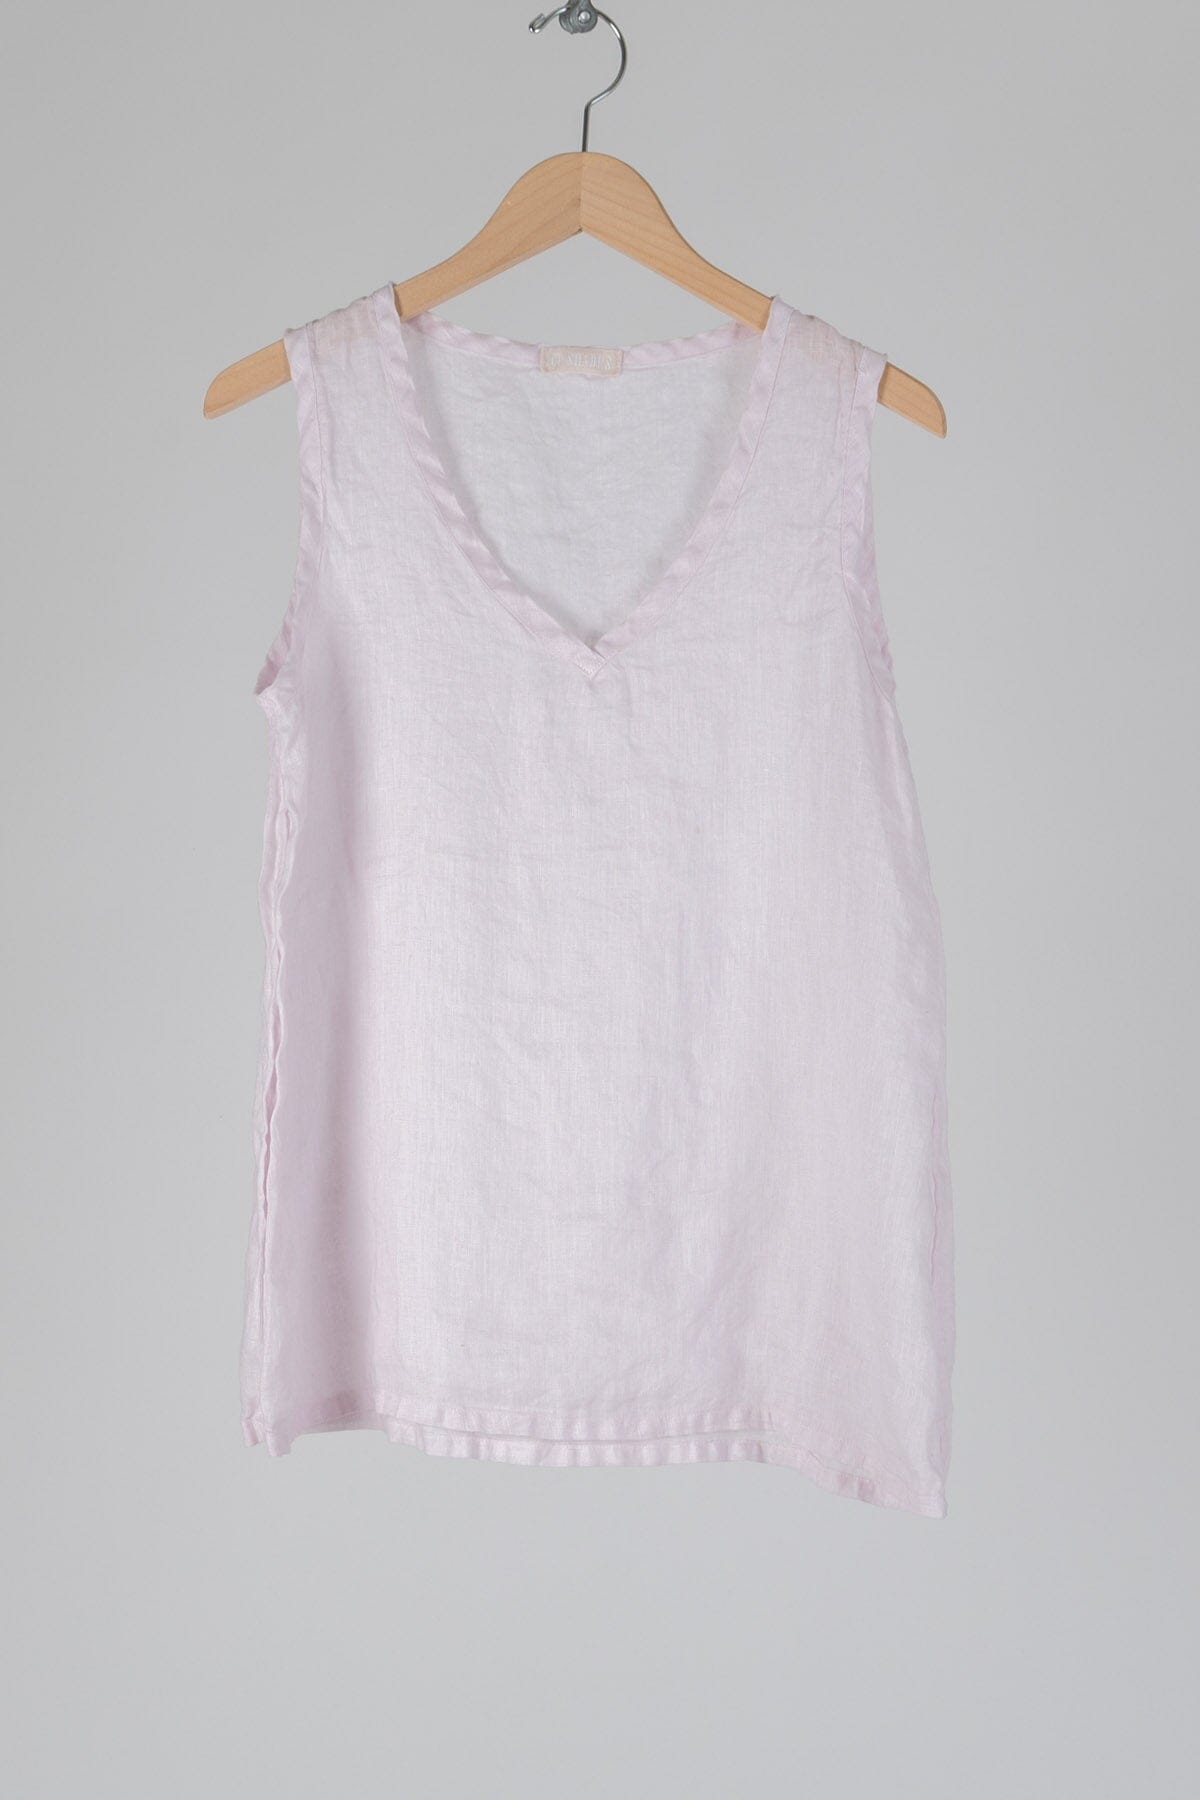 Isa - Linen S10 - Linen Shirt/Top/Tunic CP Shades lavender